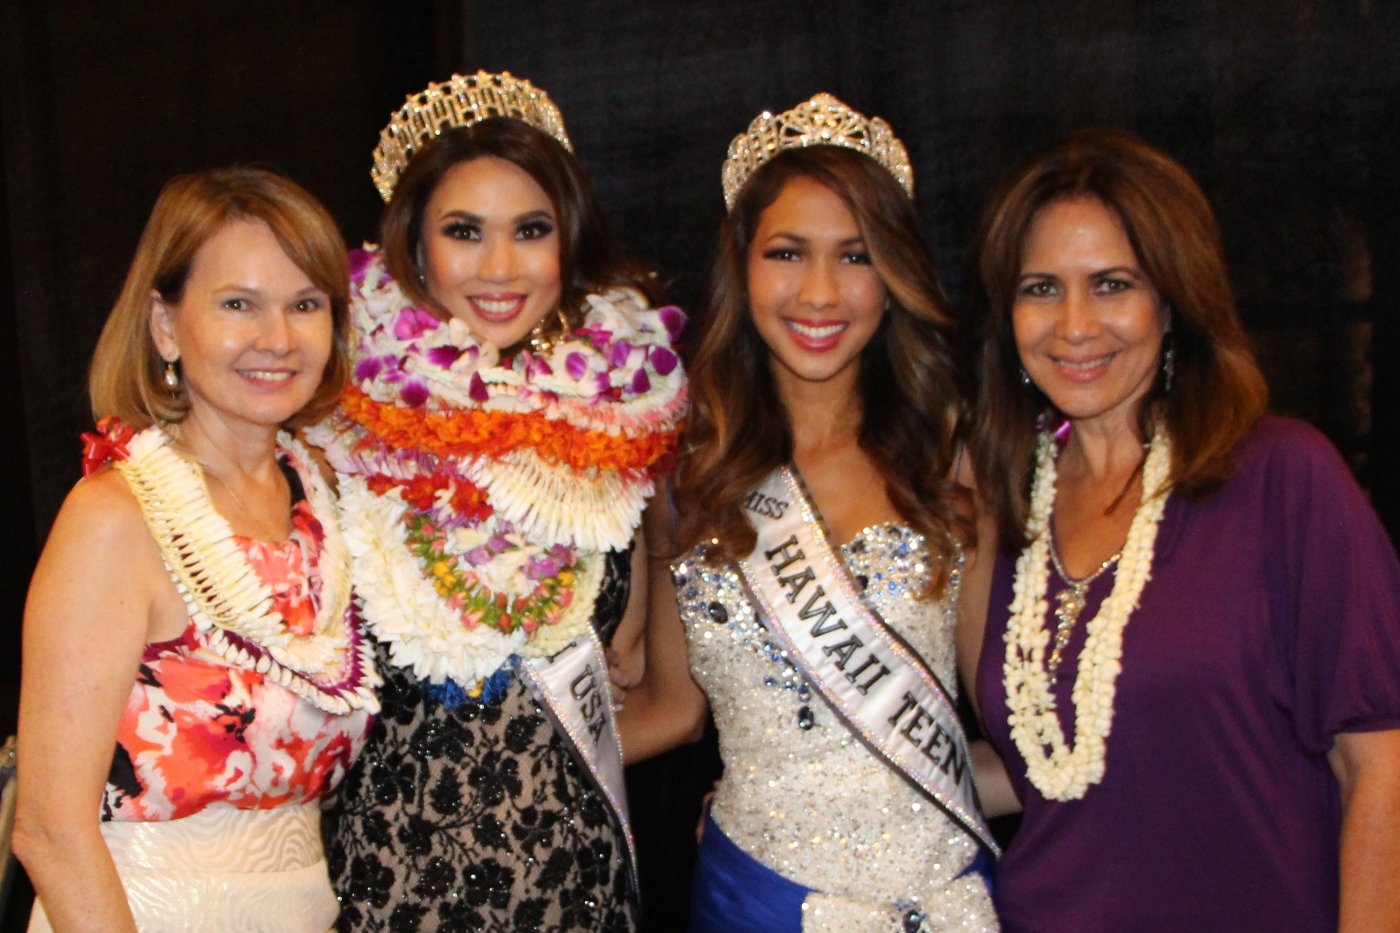 Kitty Wo (mother of Emma), Emma Wo - 2015 Miss Hawaii USA, Kyla Hee - 2015 Miss Hawaii Teen USA, and Luana Alapa (former Miss Hawaii and mother Kyla)